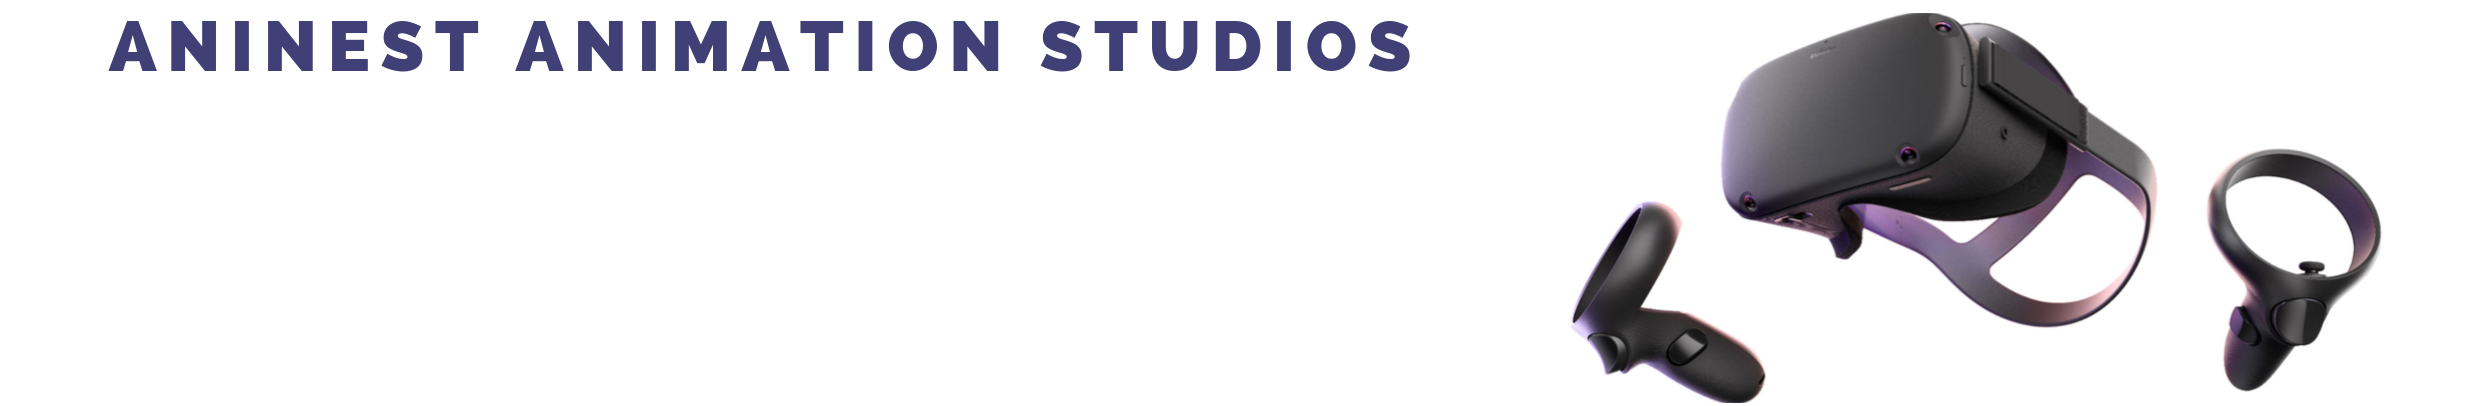 Aninest Animation Studios's profile banner